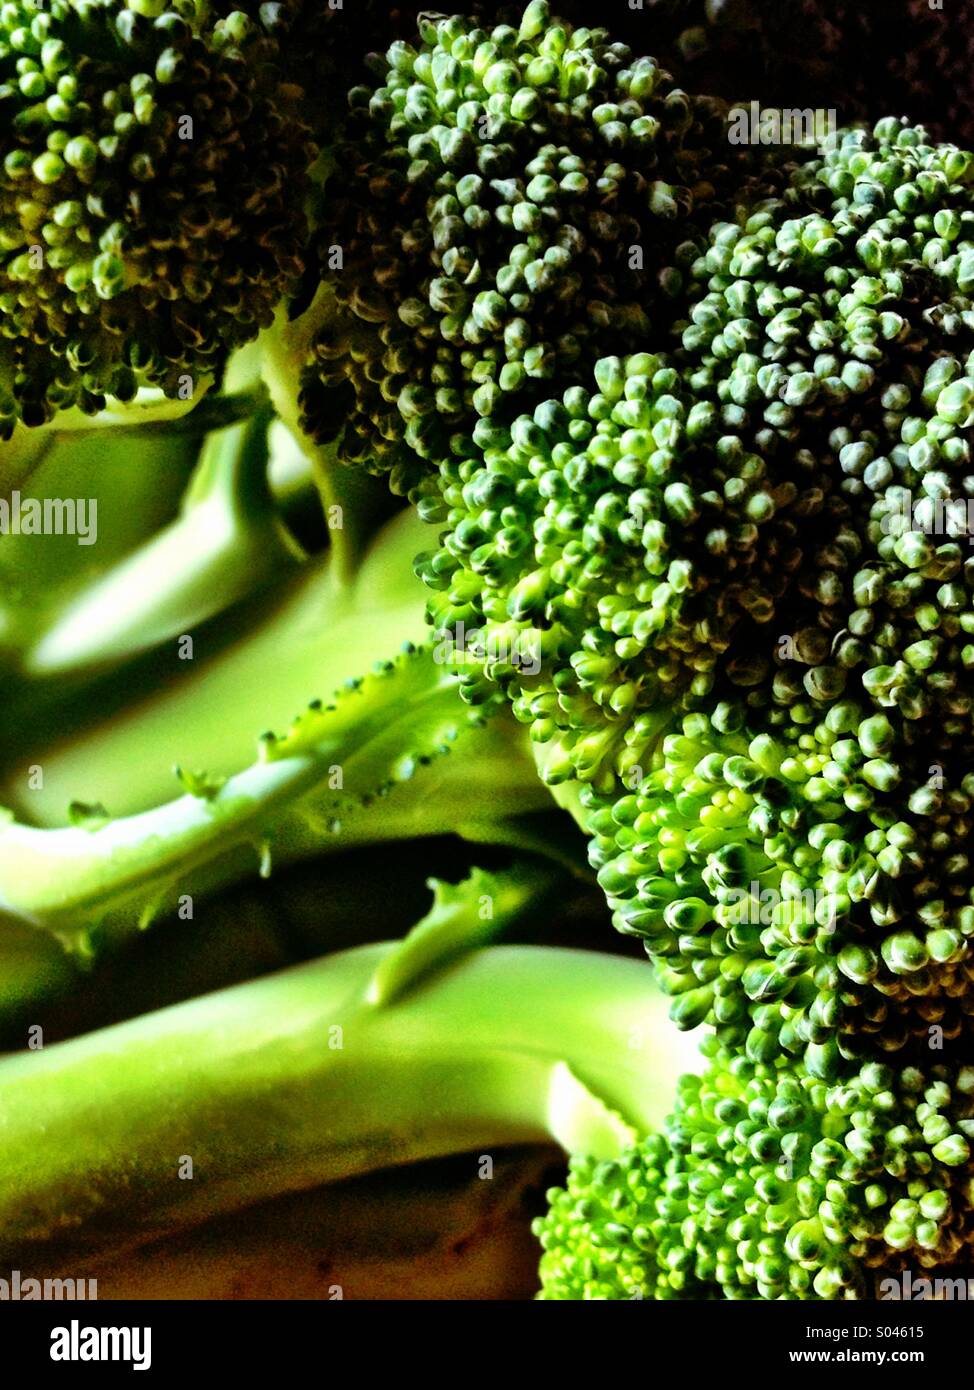 Broccoli texture Stock Photo